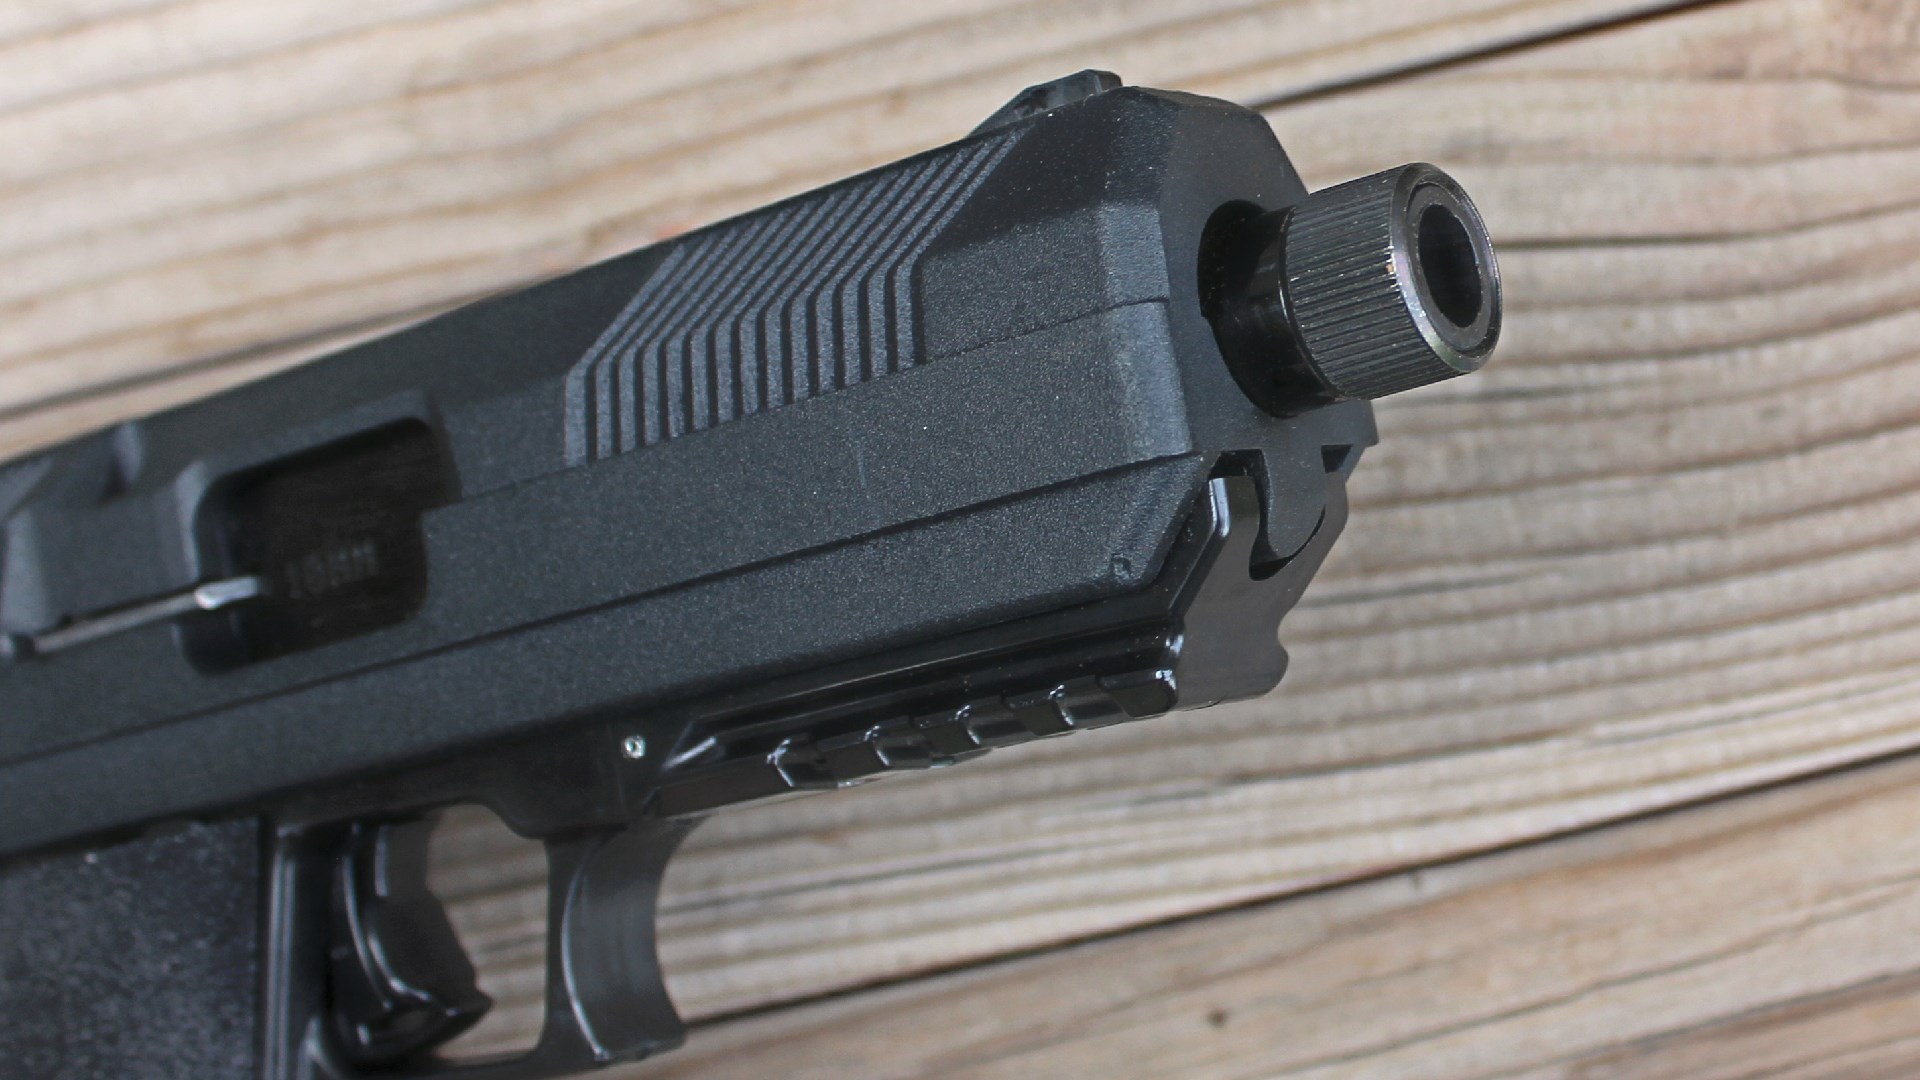 hi-point jxp 10 muzzle closeup pistol gun slide frame shown on wood boards